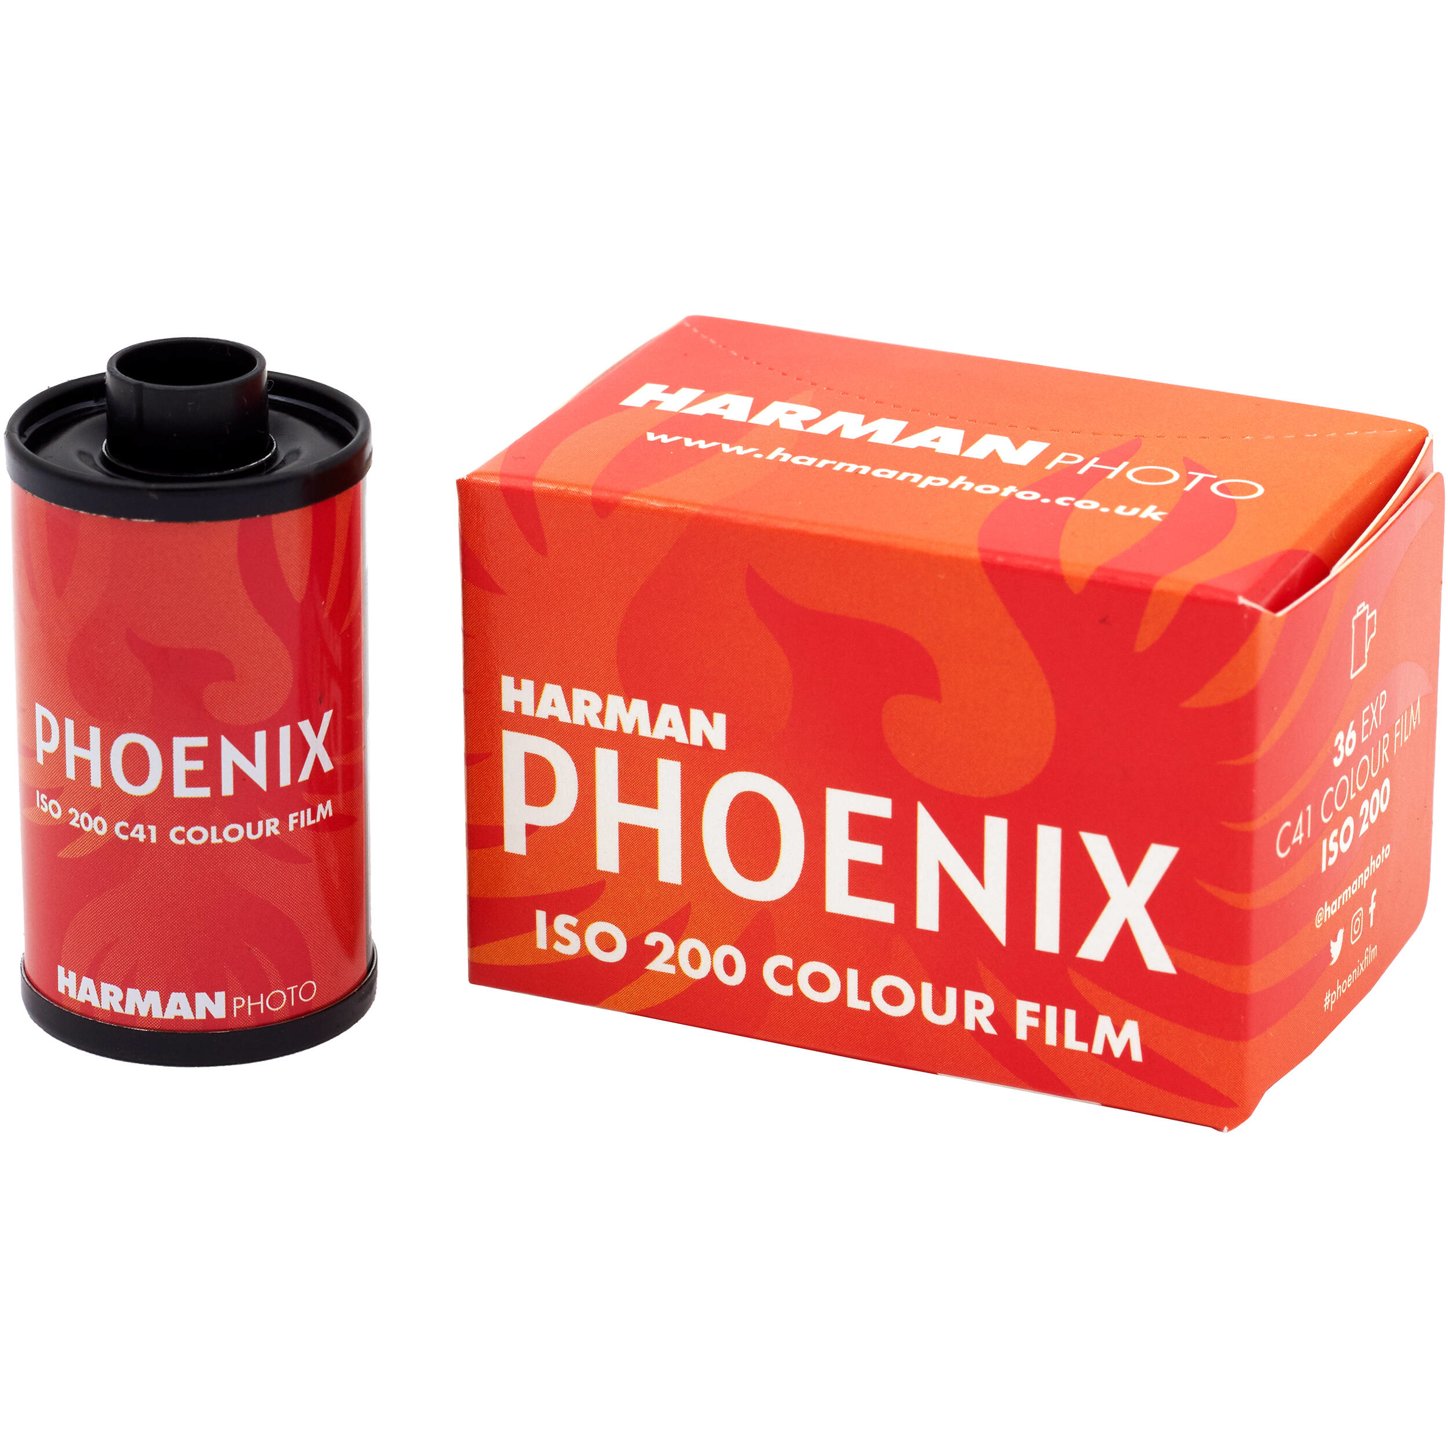 IN BOX Nikon D750 24-120 & VR Lens Kit - Black Open box **MINT** Condition